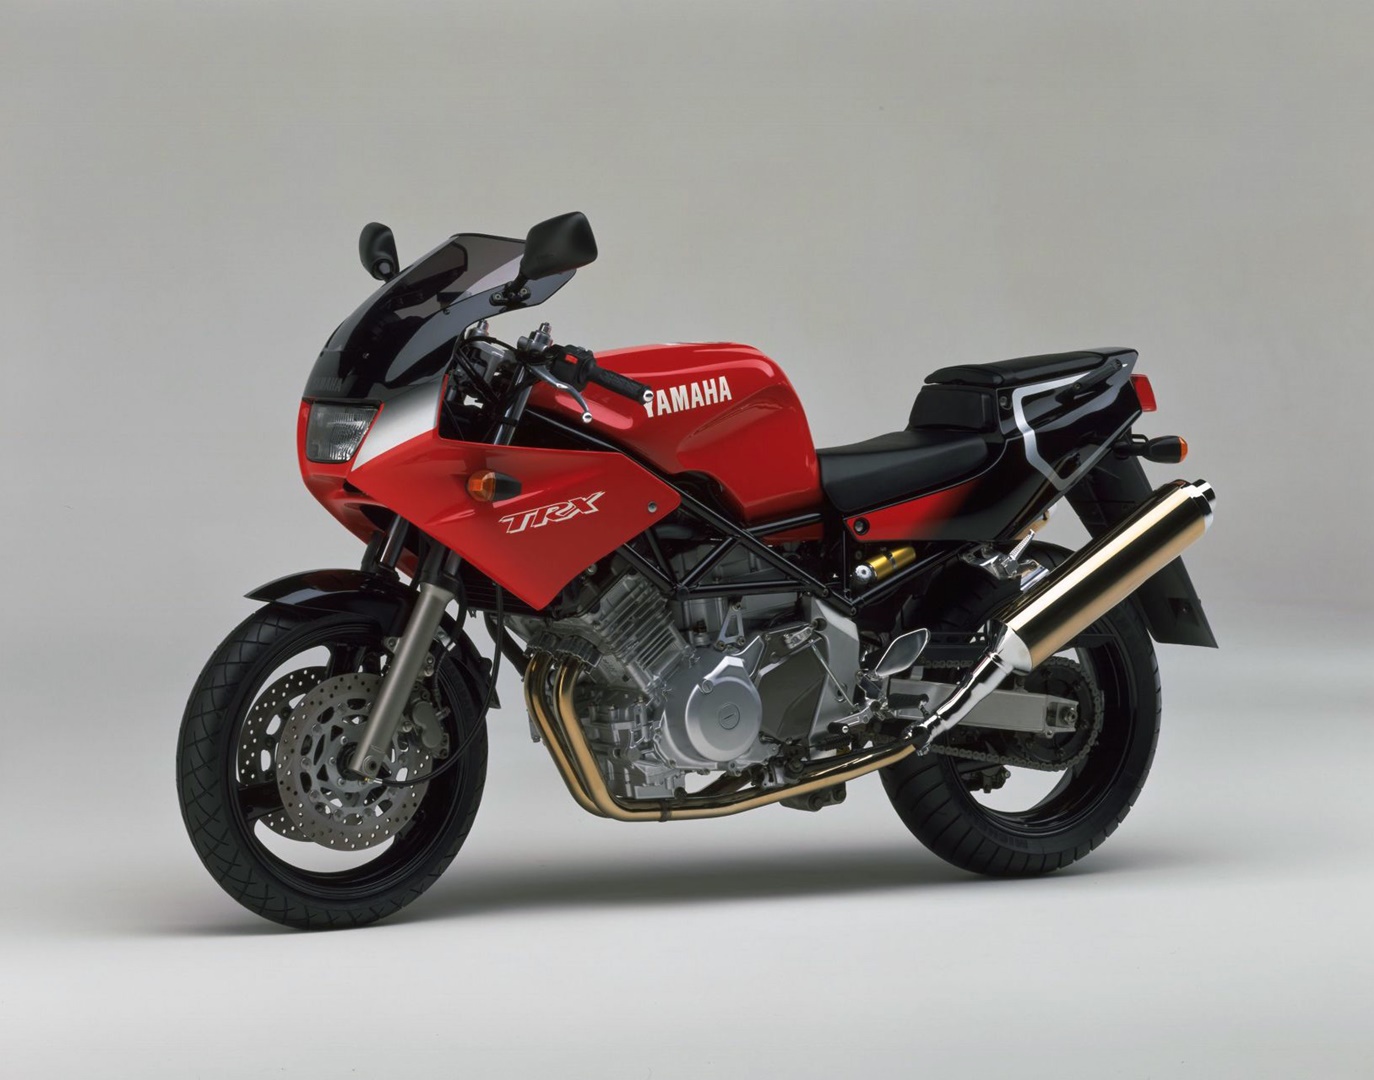 Moto del día: Yamaha TRX 850